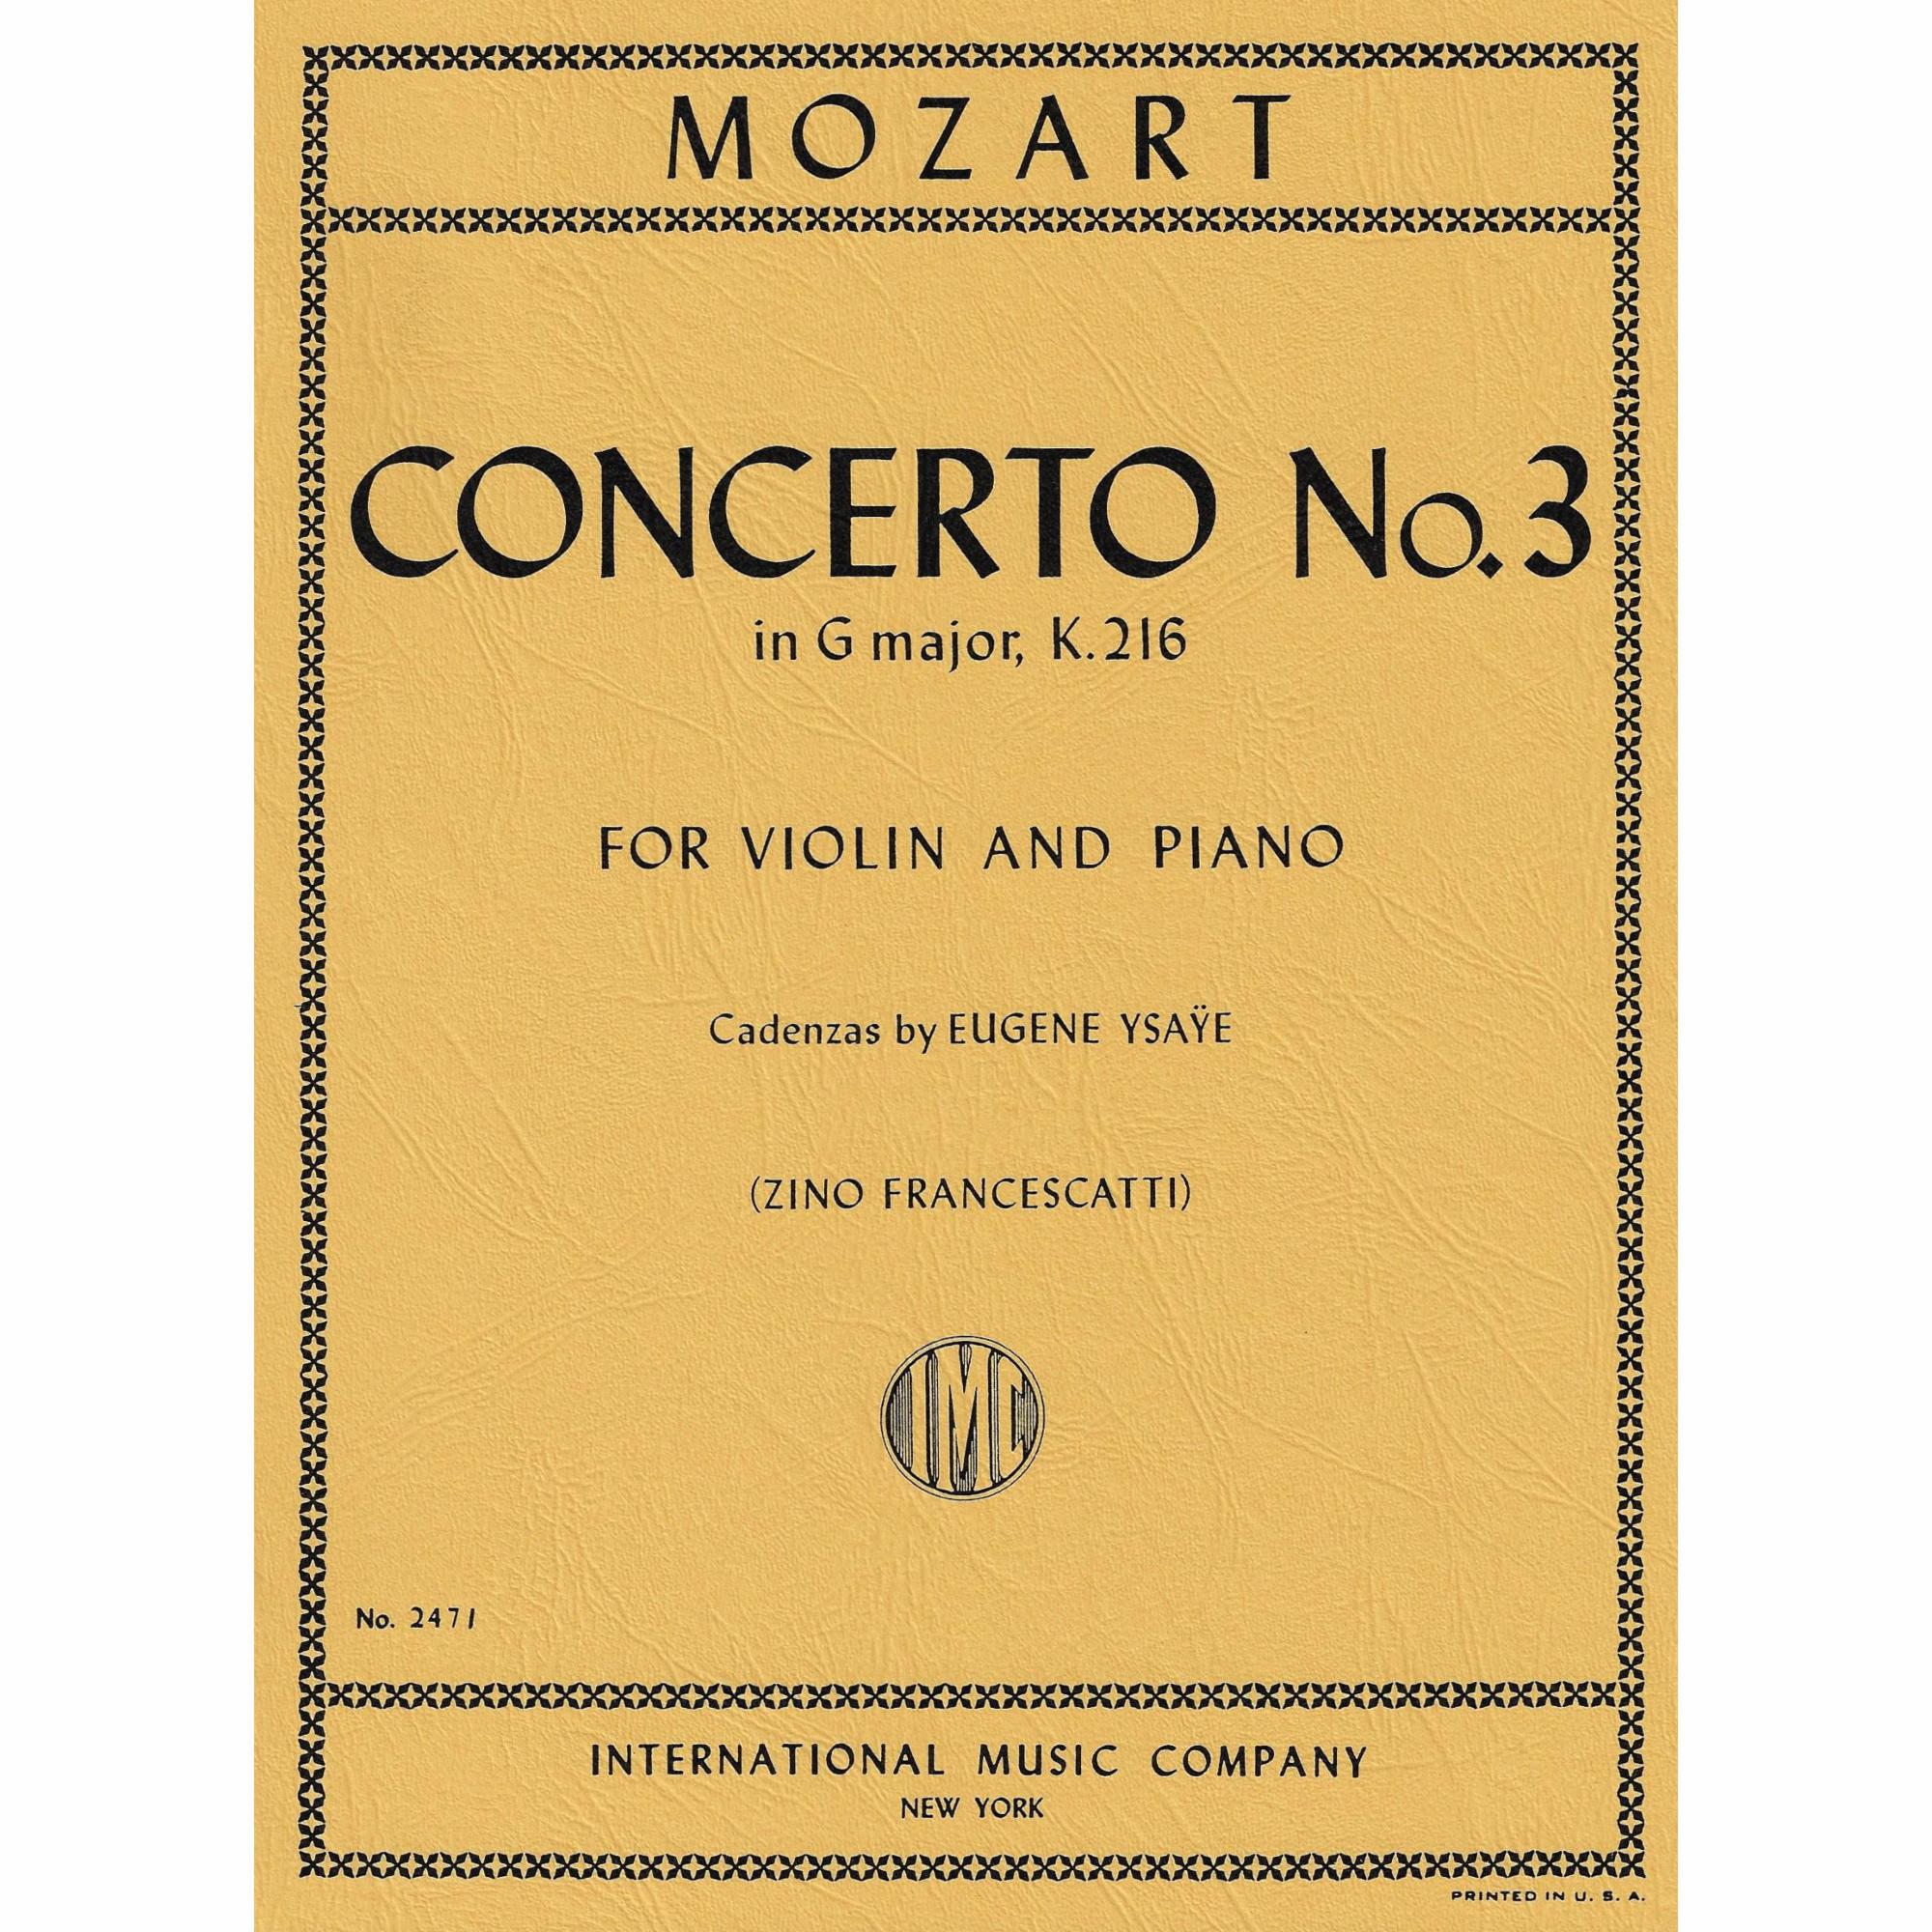 Mozart -- Concerto No. 3 in G Major, K. 216 for Violin and Piano